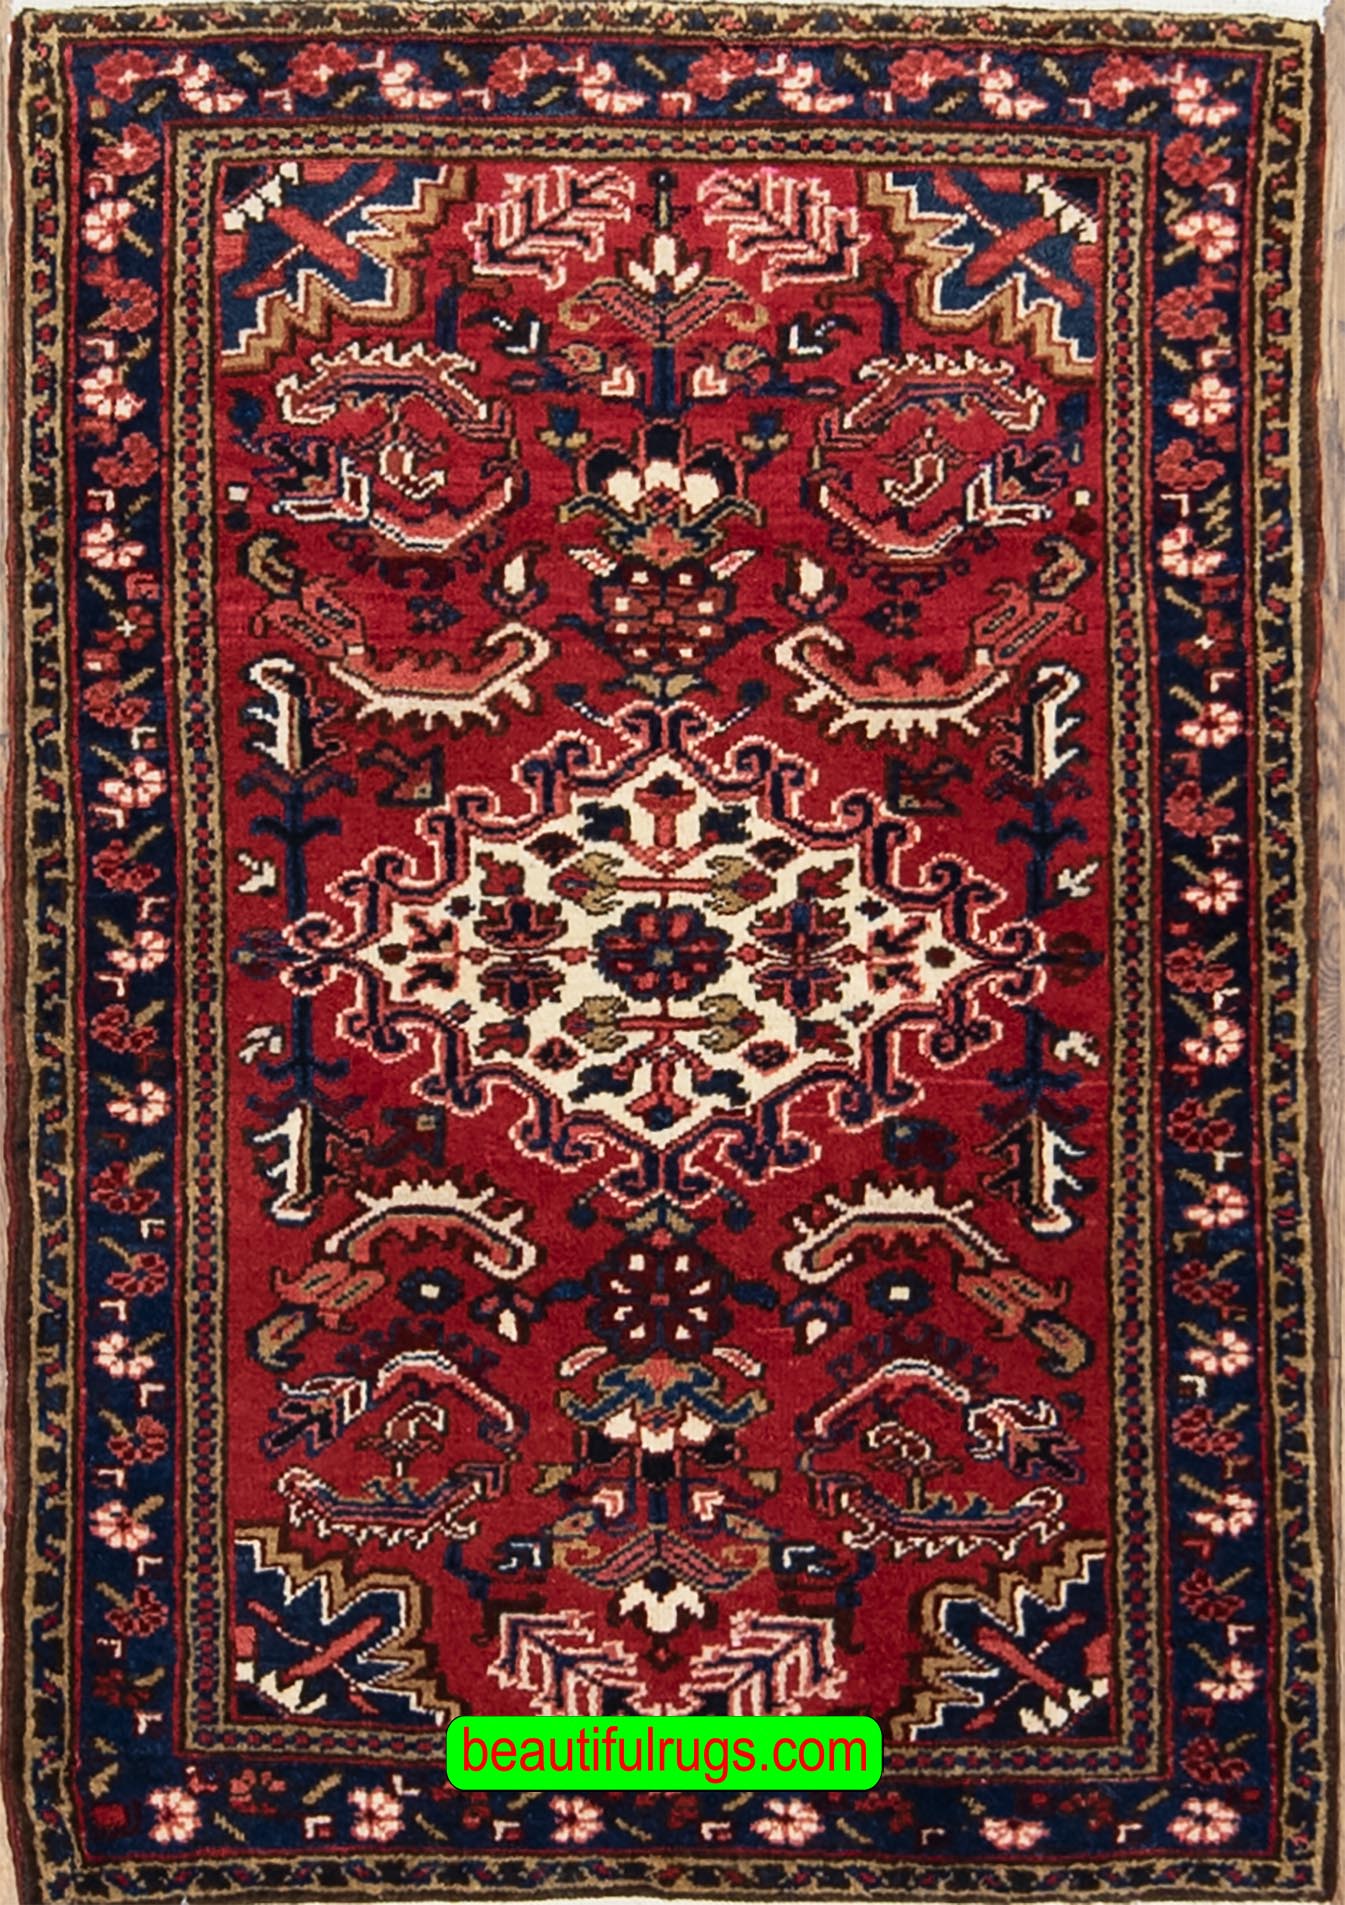 Handmade Persian Heriz wool rug, geometric style rug in red color. Size 3.1x4.7.